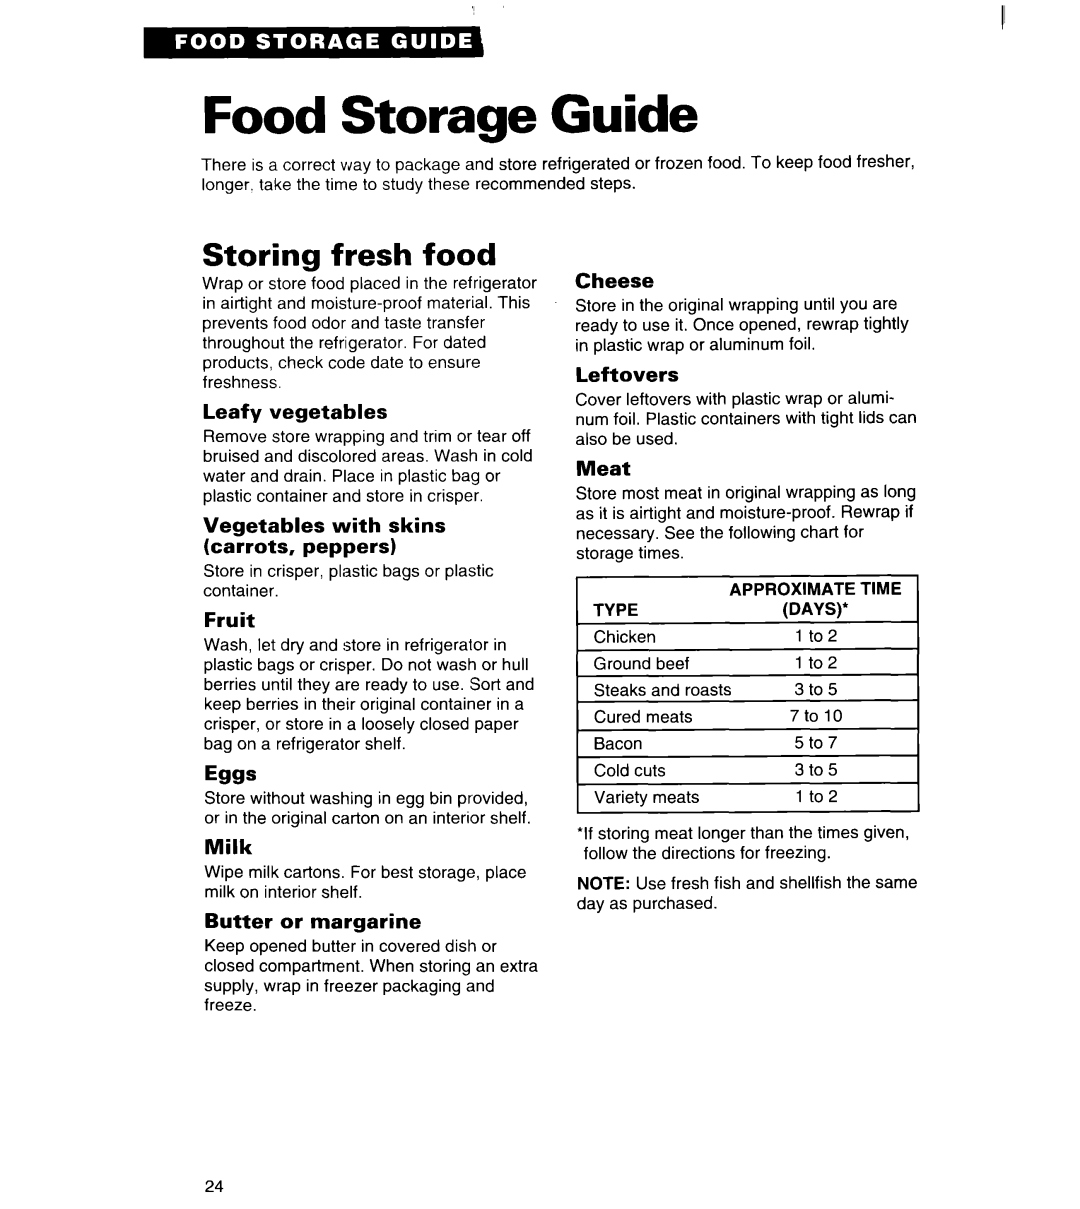 Whirlpool RS20DK Food Storage Guide, Storing fresh food, Leafy vegetables, Vegetables with skins carrots, peppers, Fruit 